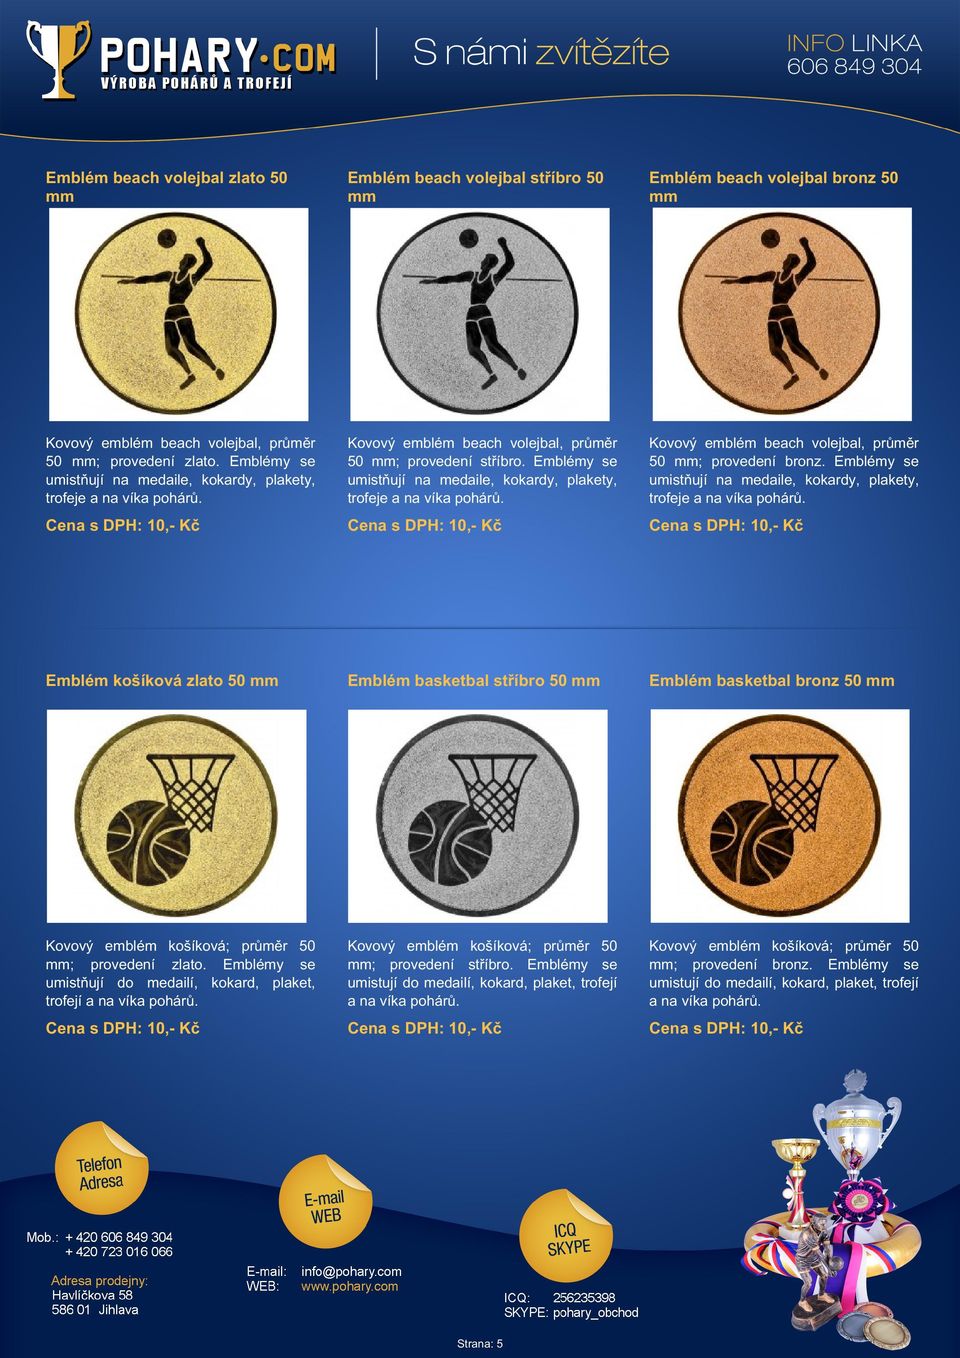 Emblémy se umistňují na medaile, kokardy, plakety, trofeje a na Kovový emblém beach volejbal, průměr 50 ; provedení bronz.